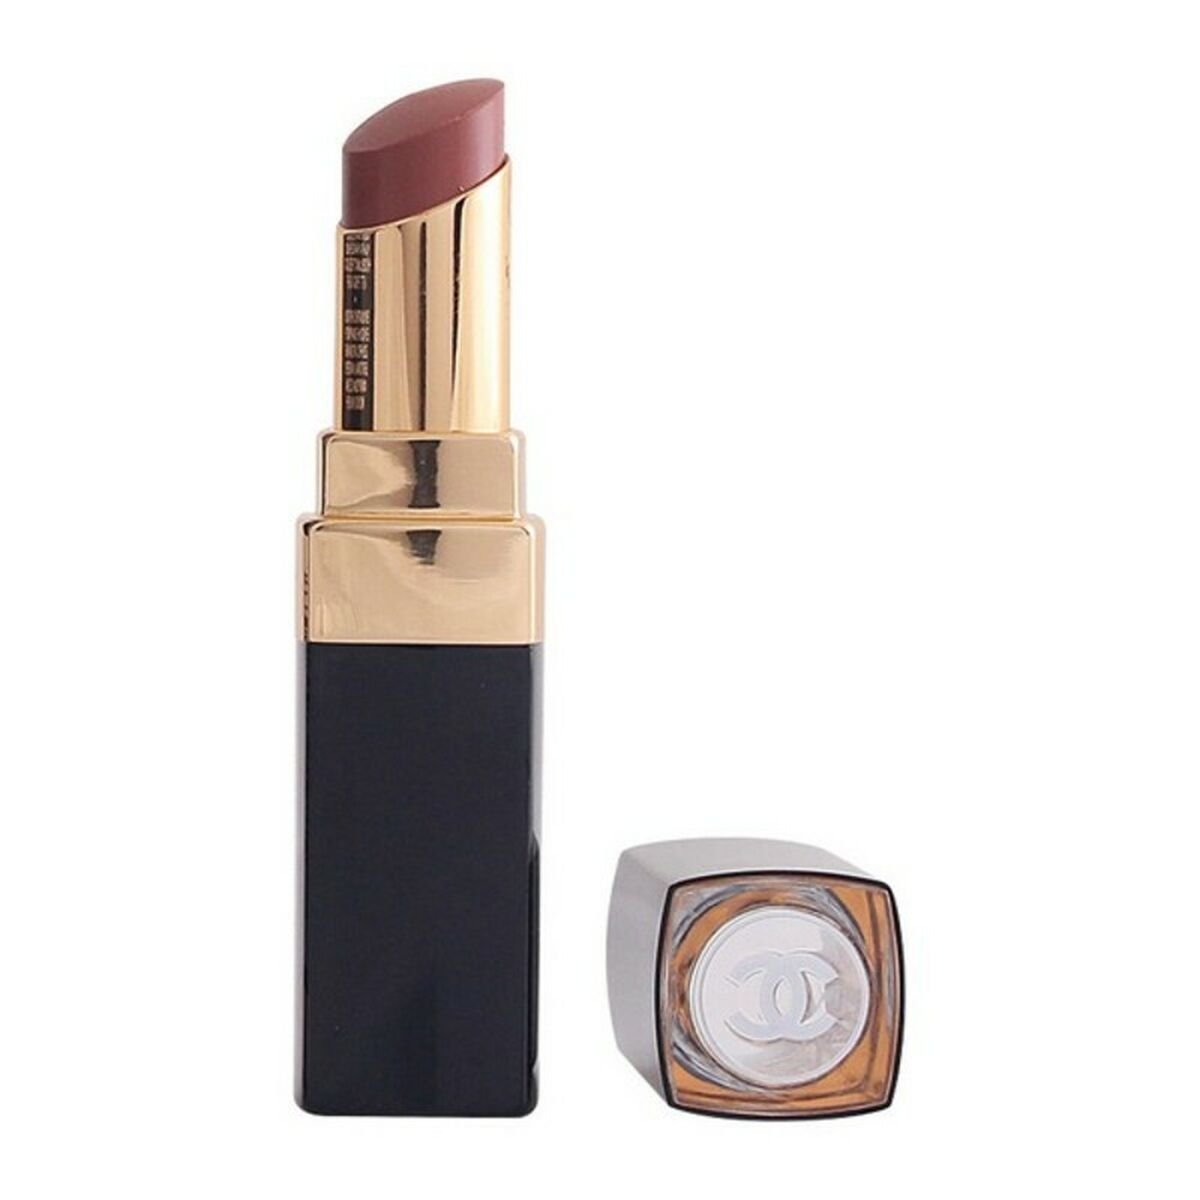 Lipstick Rouge Coco Chanel - JOSEPH BEAUTY